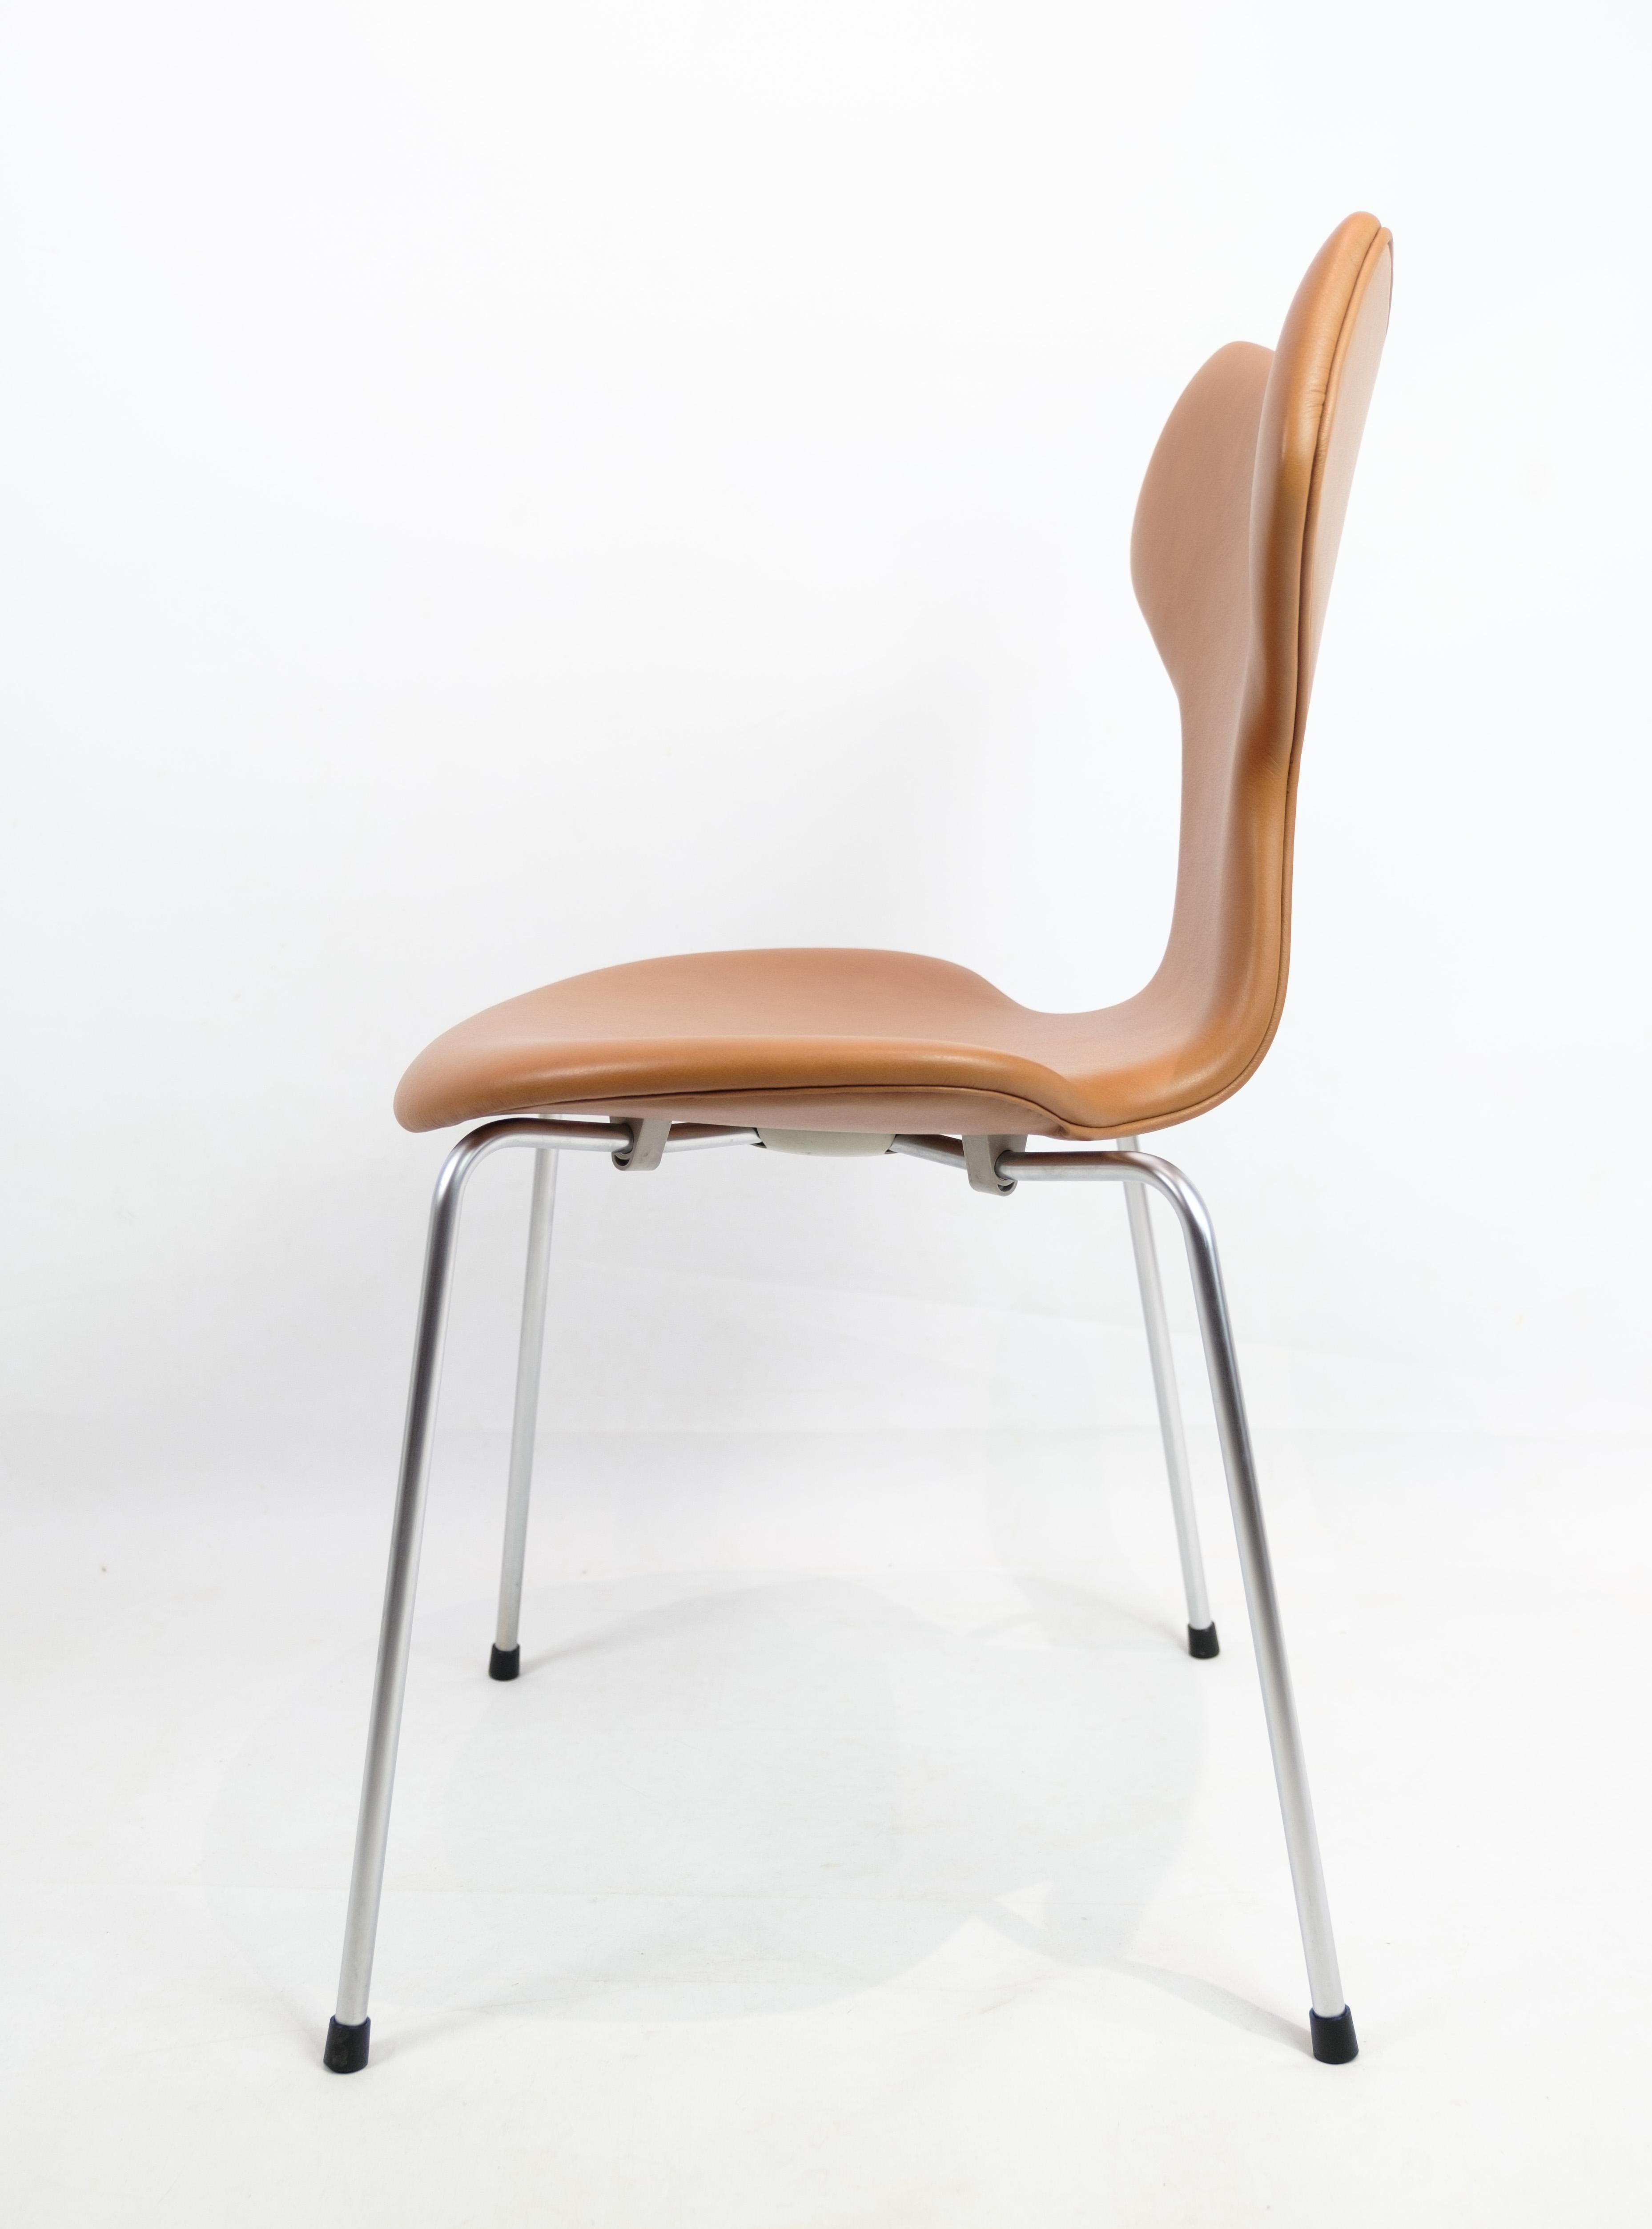 Danish Grand Prix chair, Model 3130, Arne Jacobsen, 1957